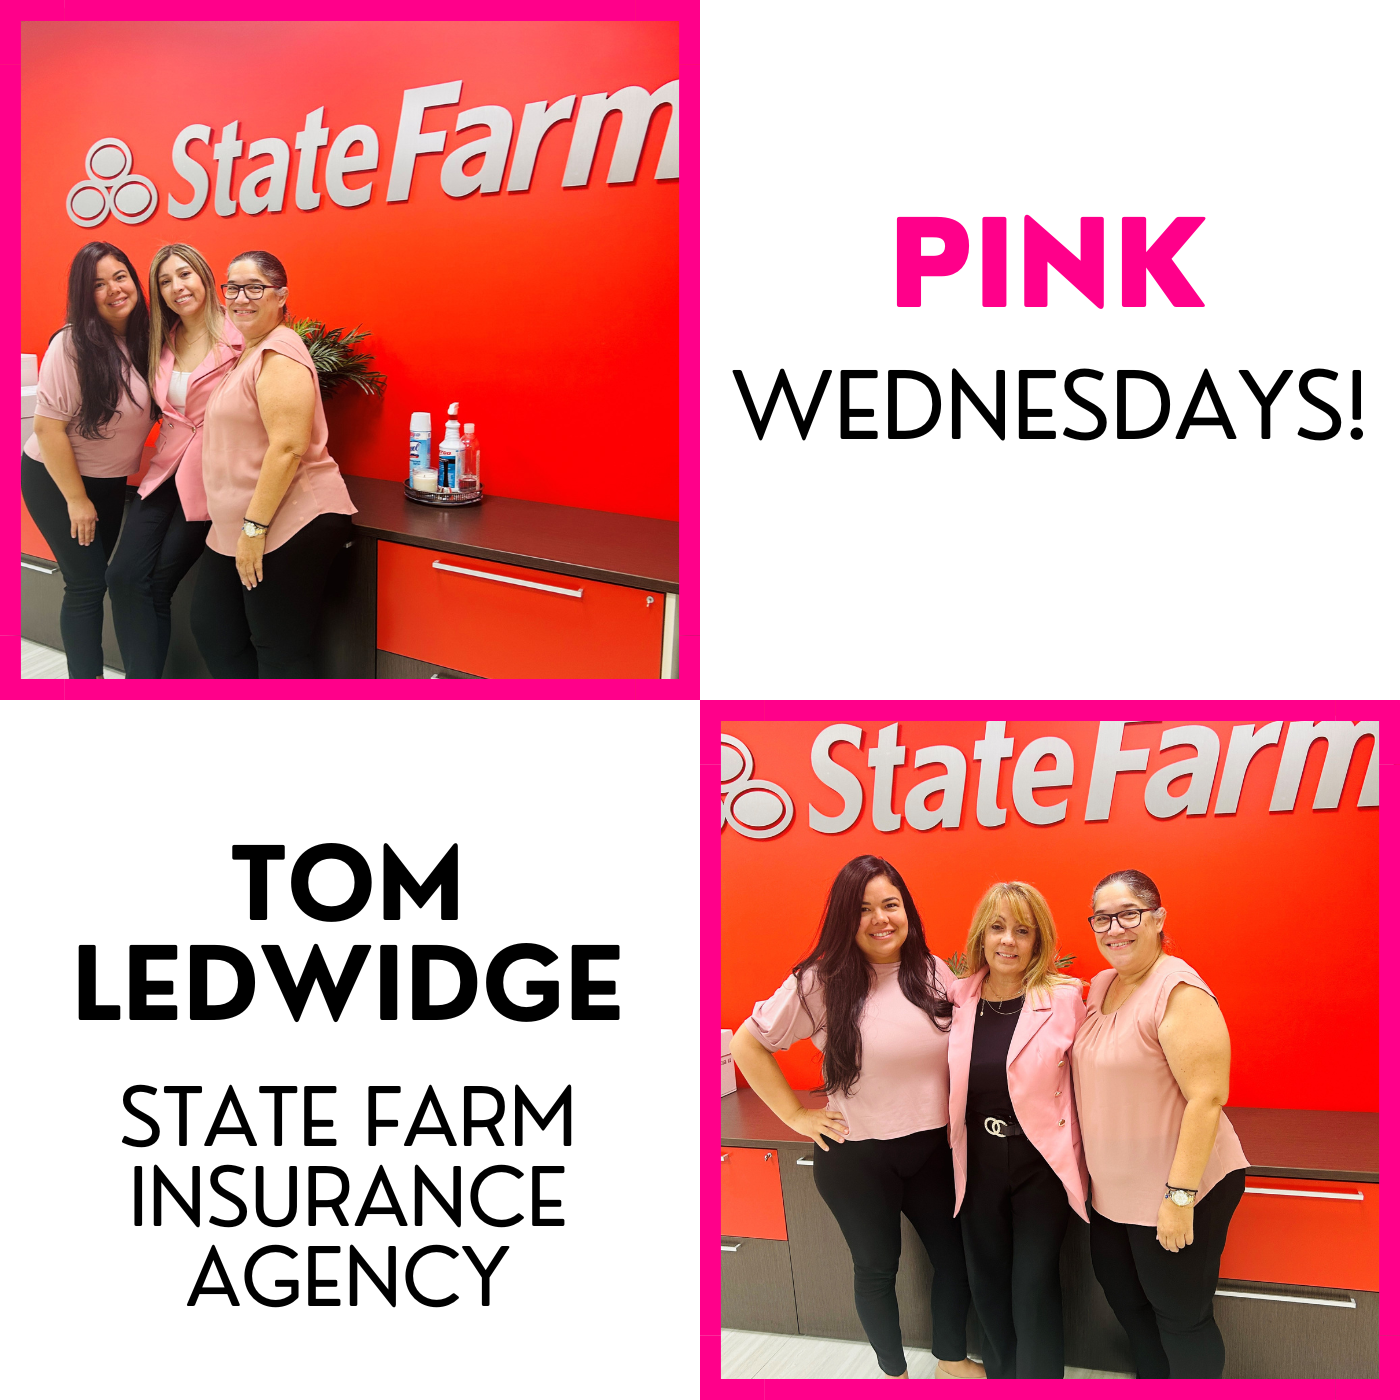 Tom Ledwidge - State Farm Insurance Agent
Pink Wednesdays!